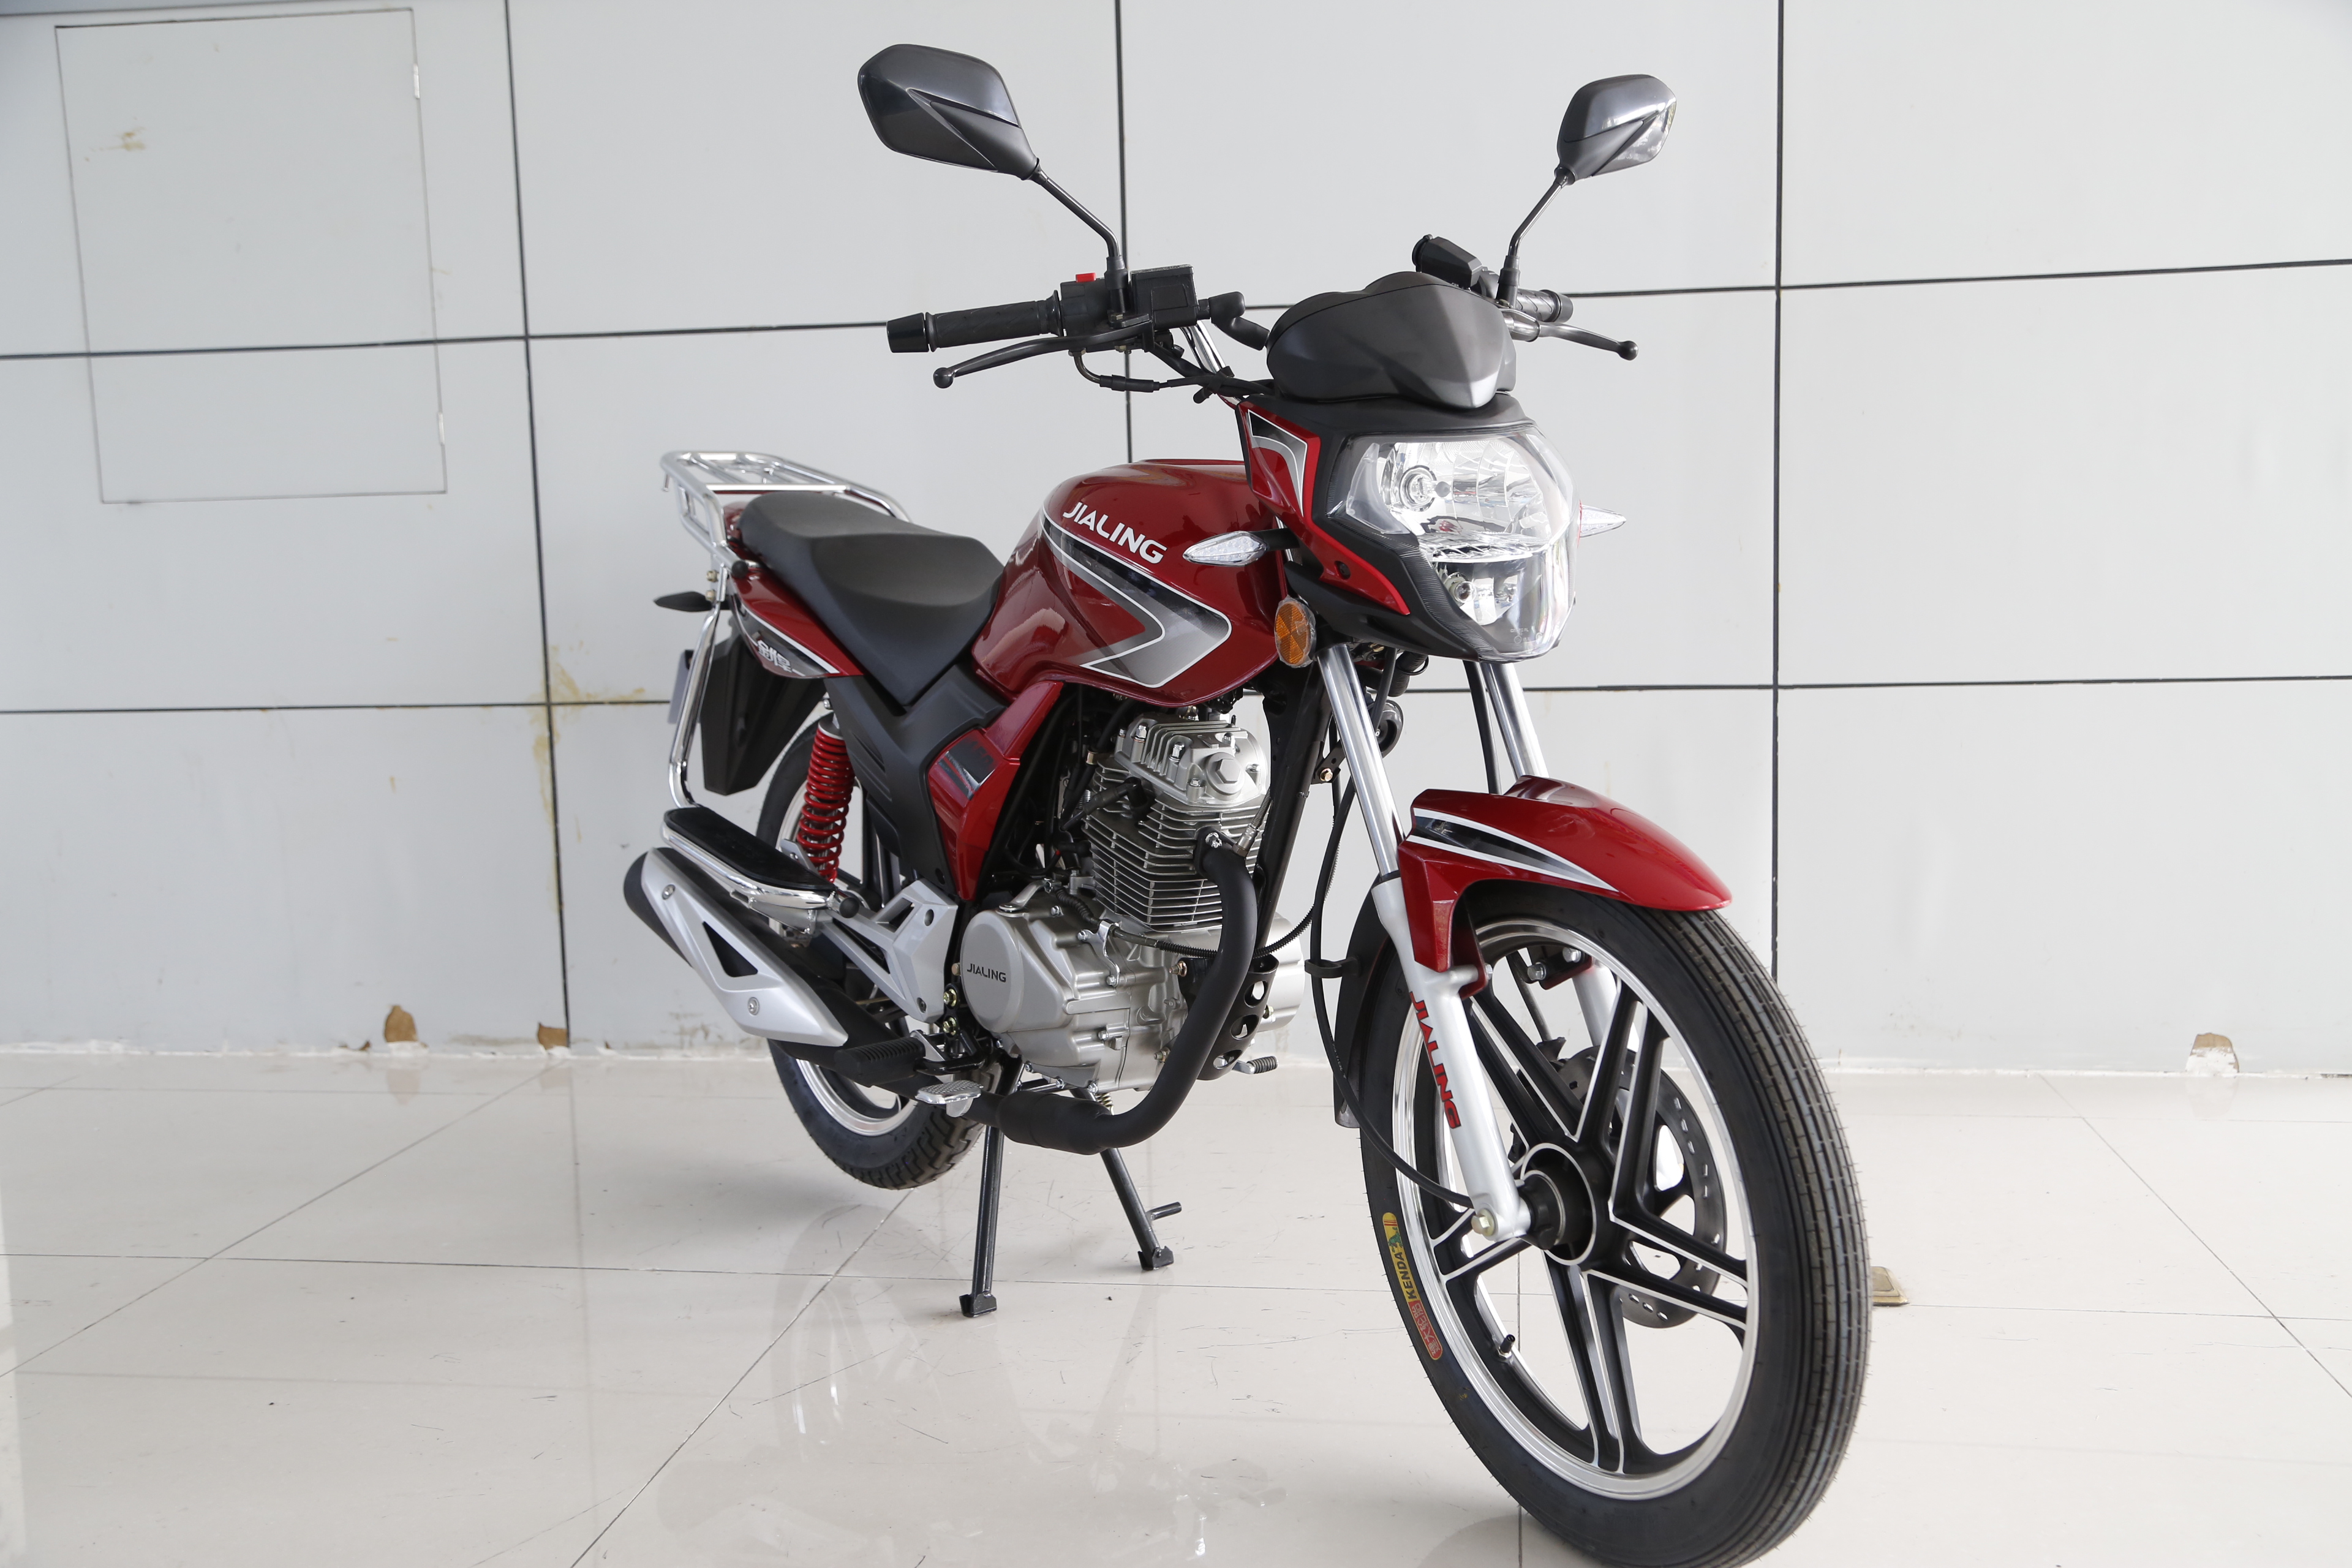 Jialing 150CC Motorcycle